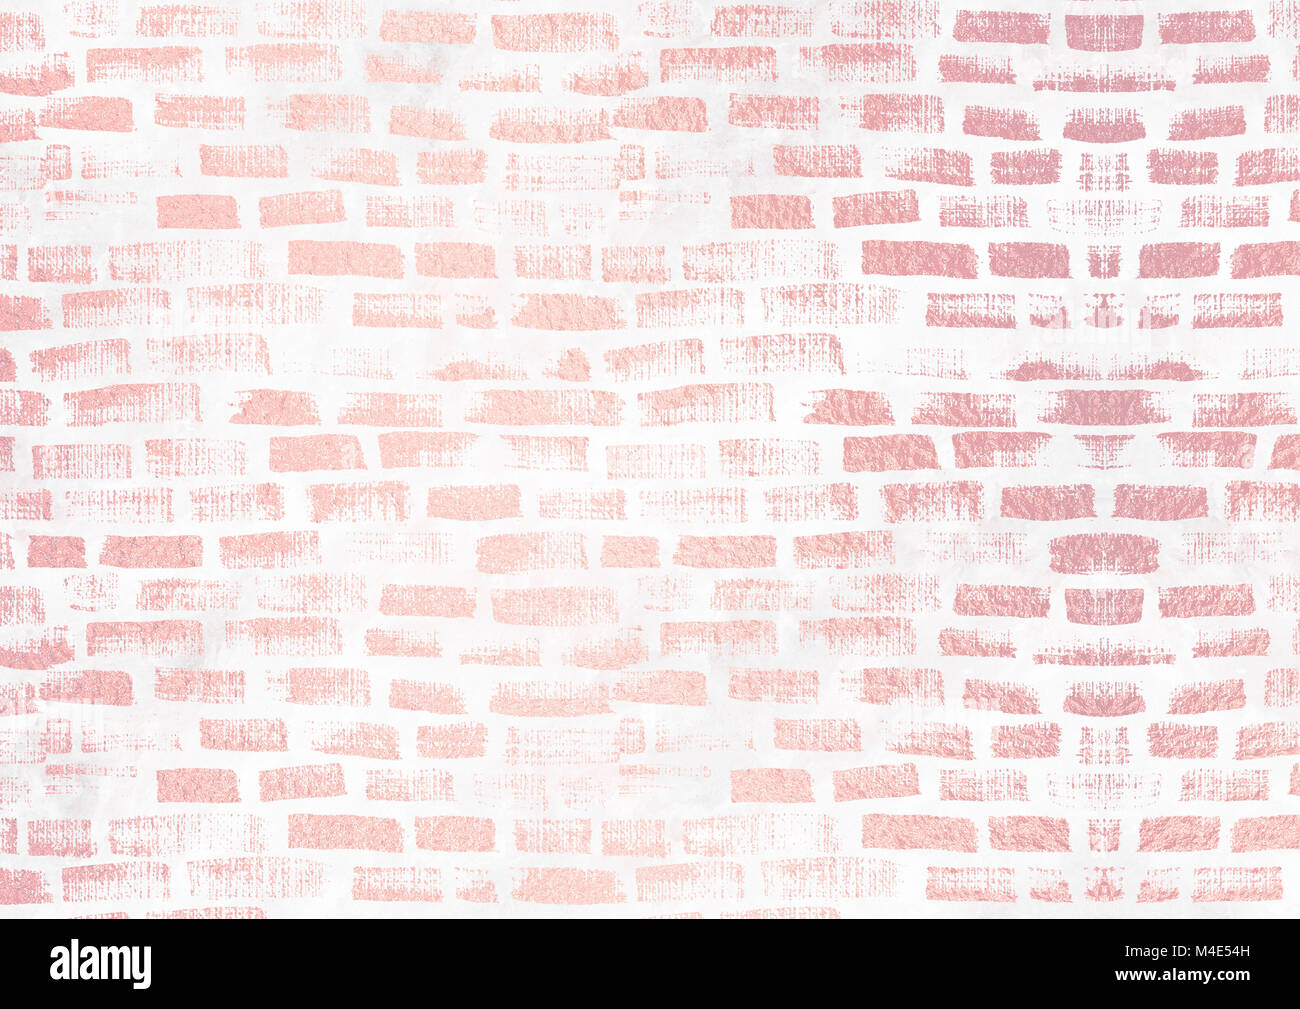 The horizontal pastel gradient pink brick wall textured background Stock Photo